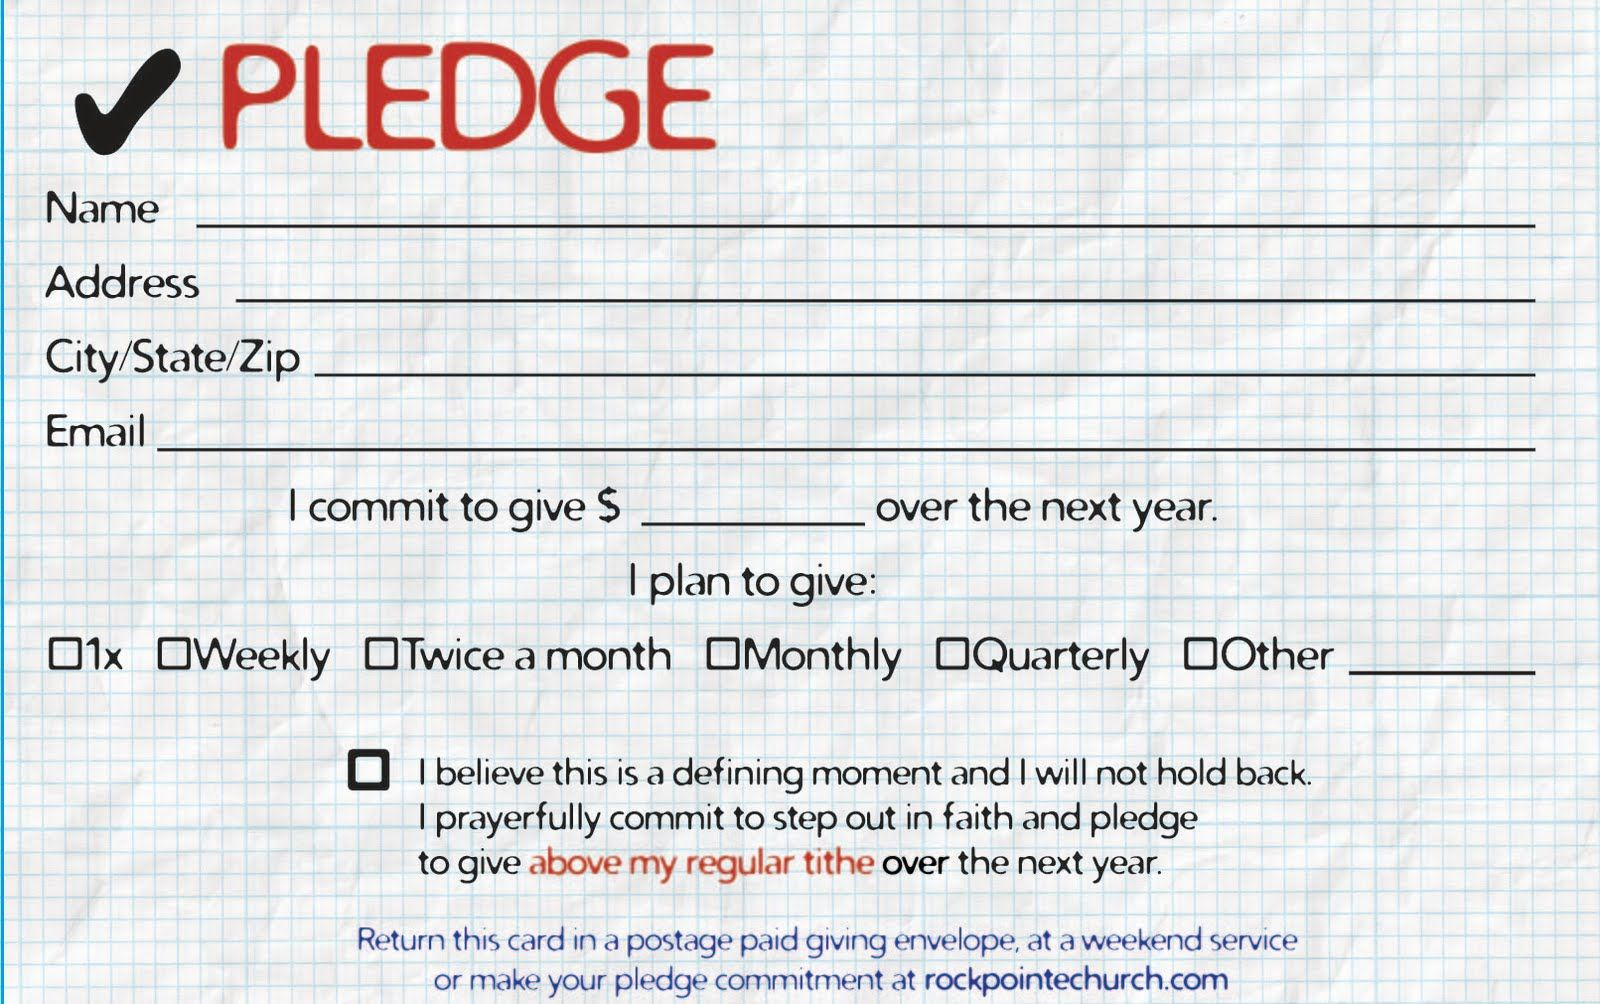 Pledge Cards For Churches | Pledge Card Templates | Card Inside Building Fund Pledge Card Template